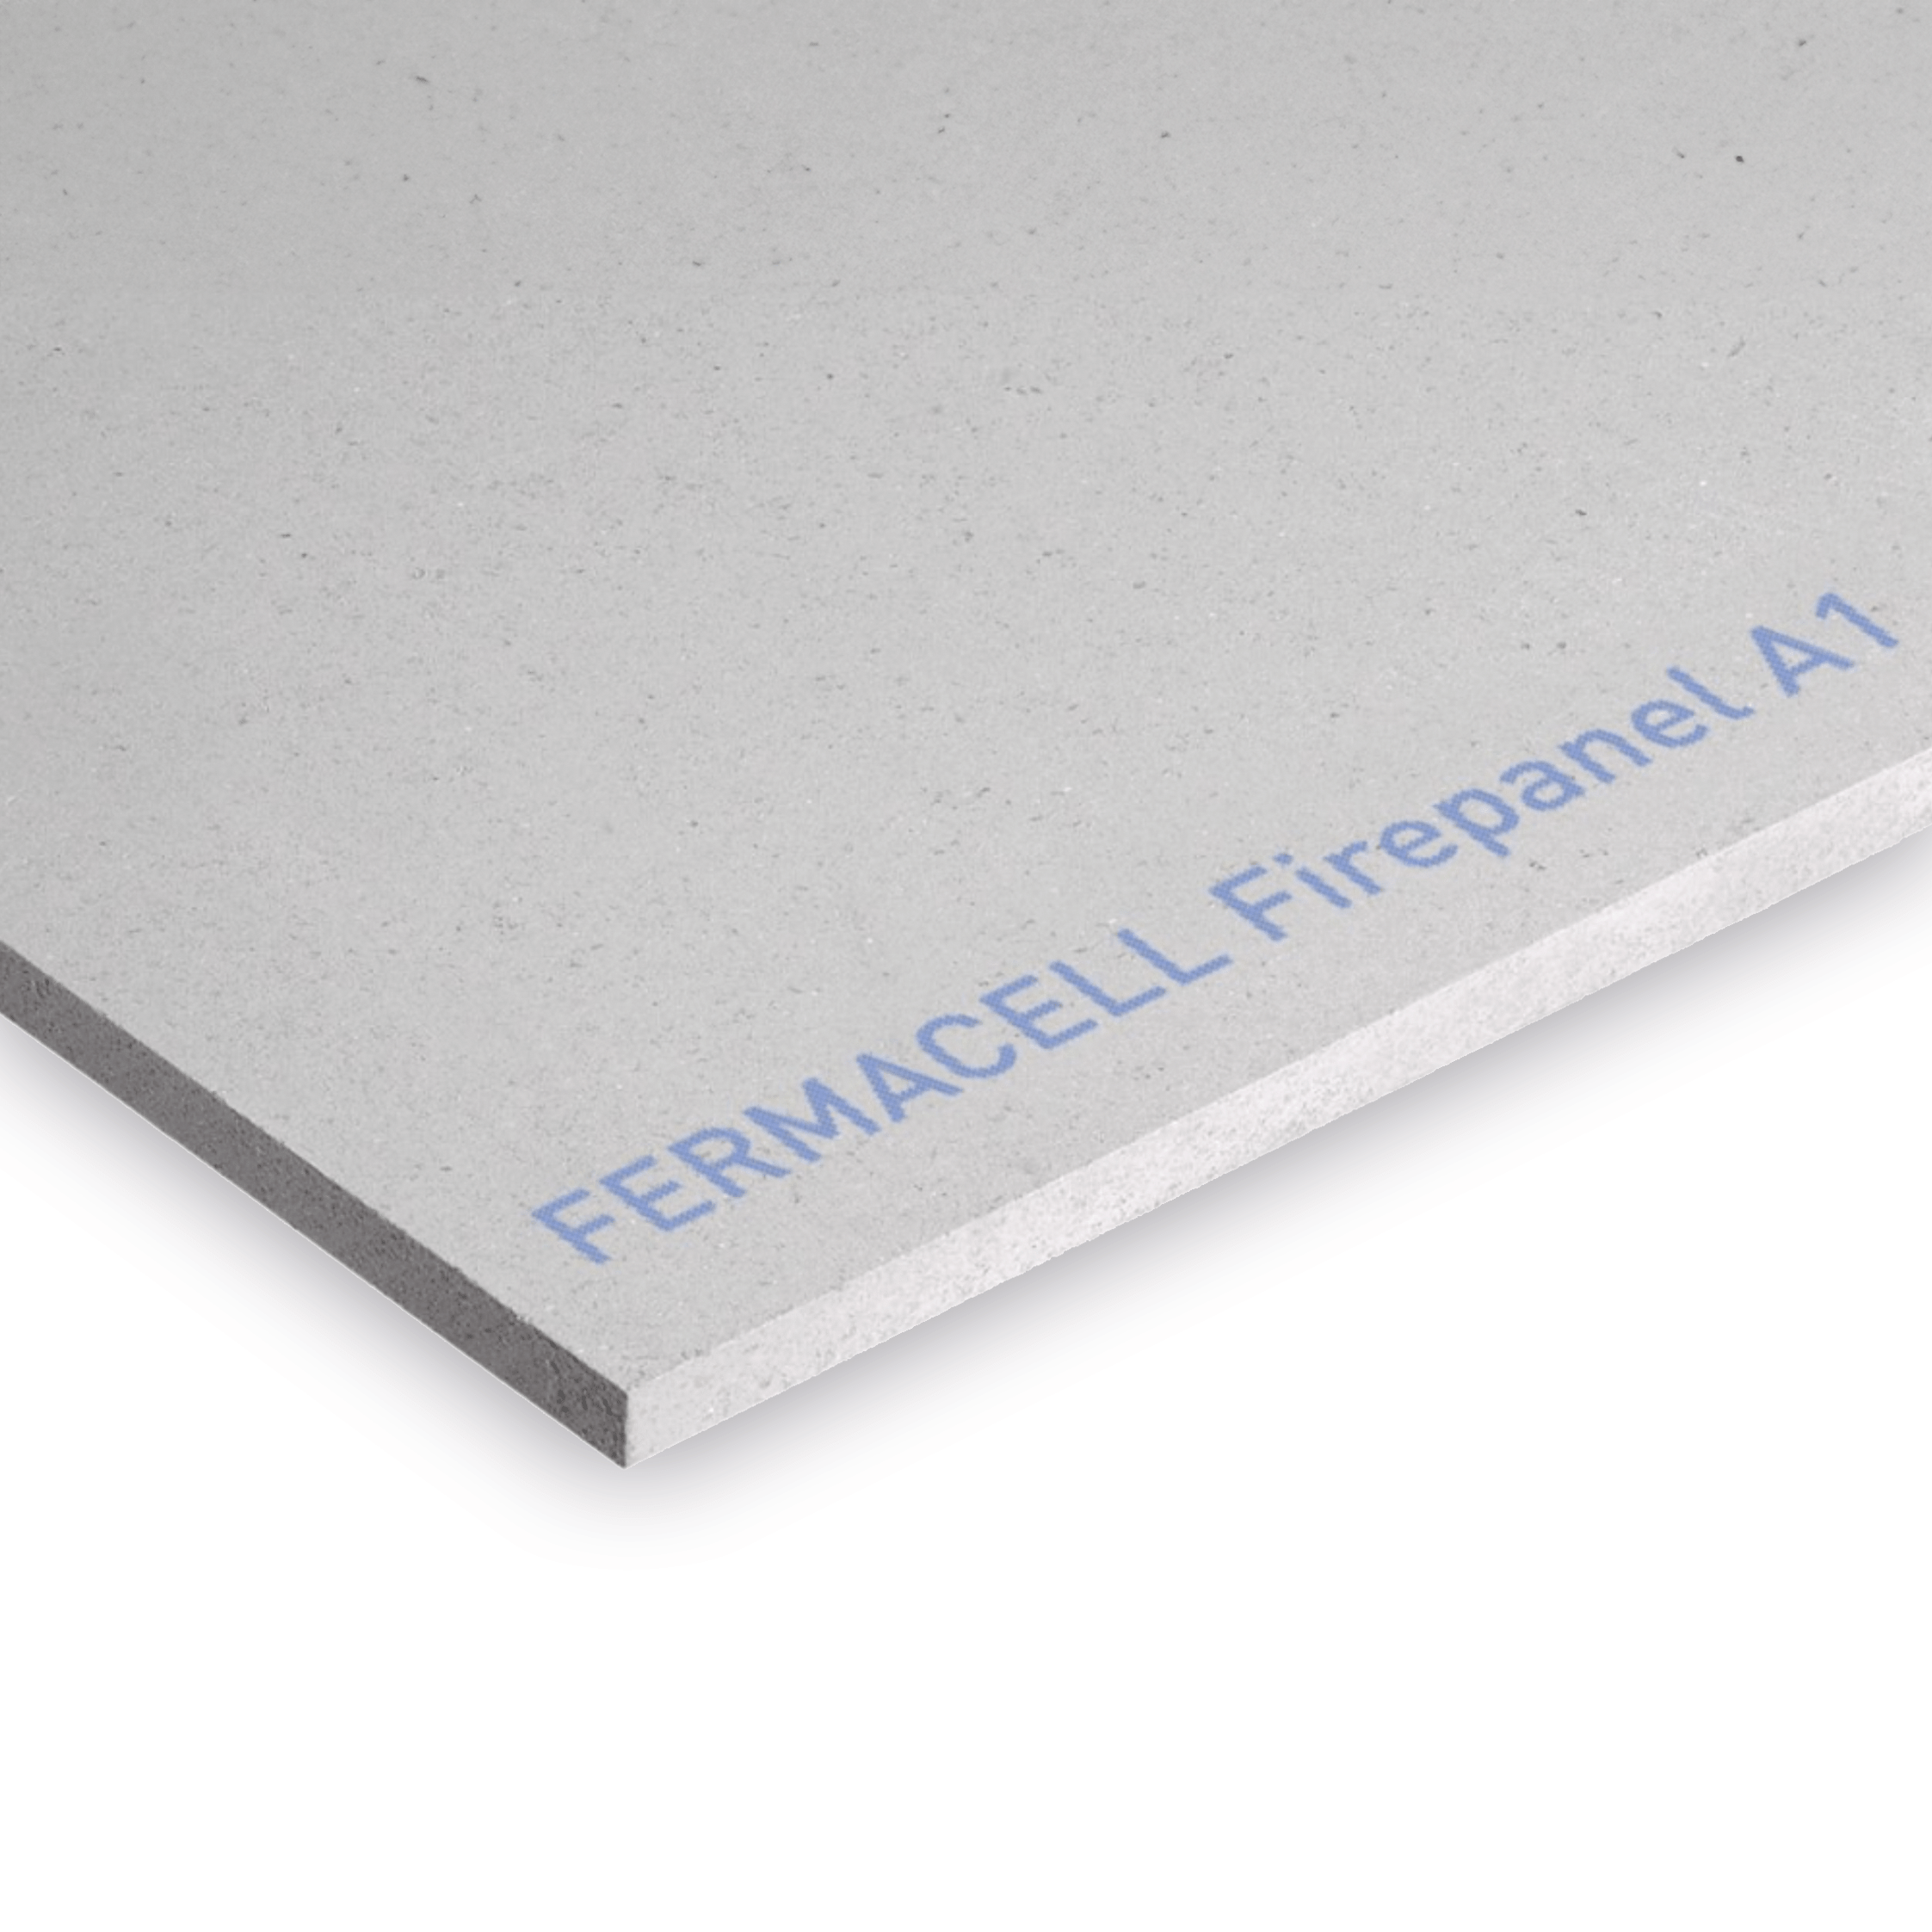 Fermacell Fermacell® Firepanel A1 | 2600mm x 1200mm x 15mm 4007548017435 BM01910